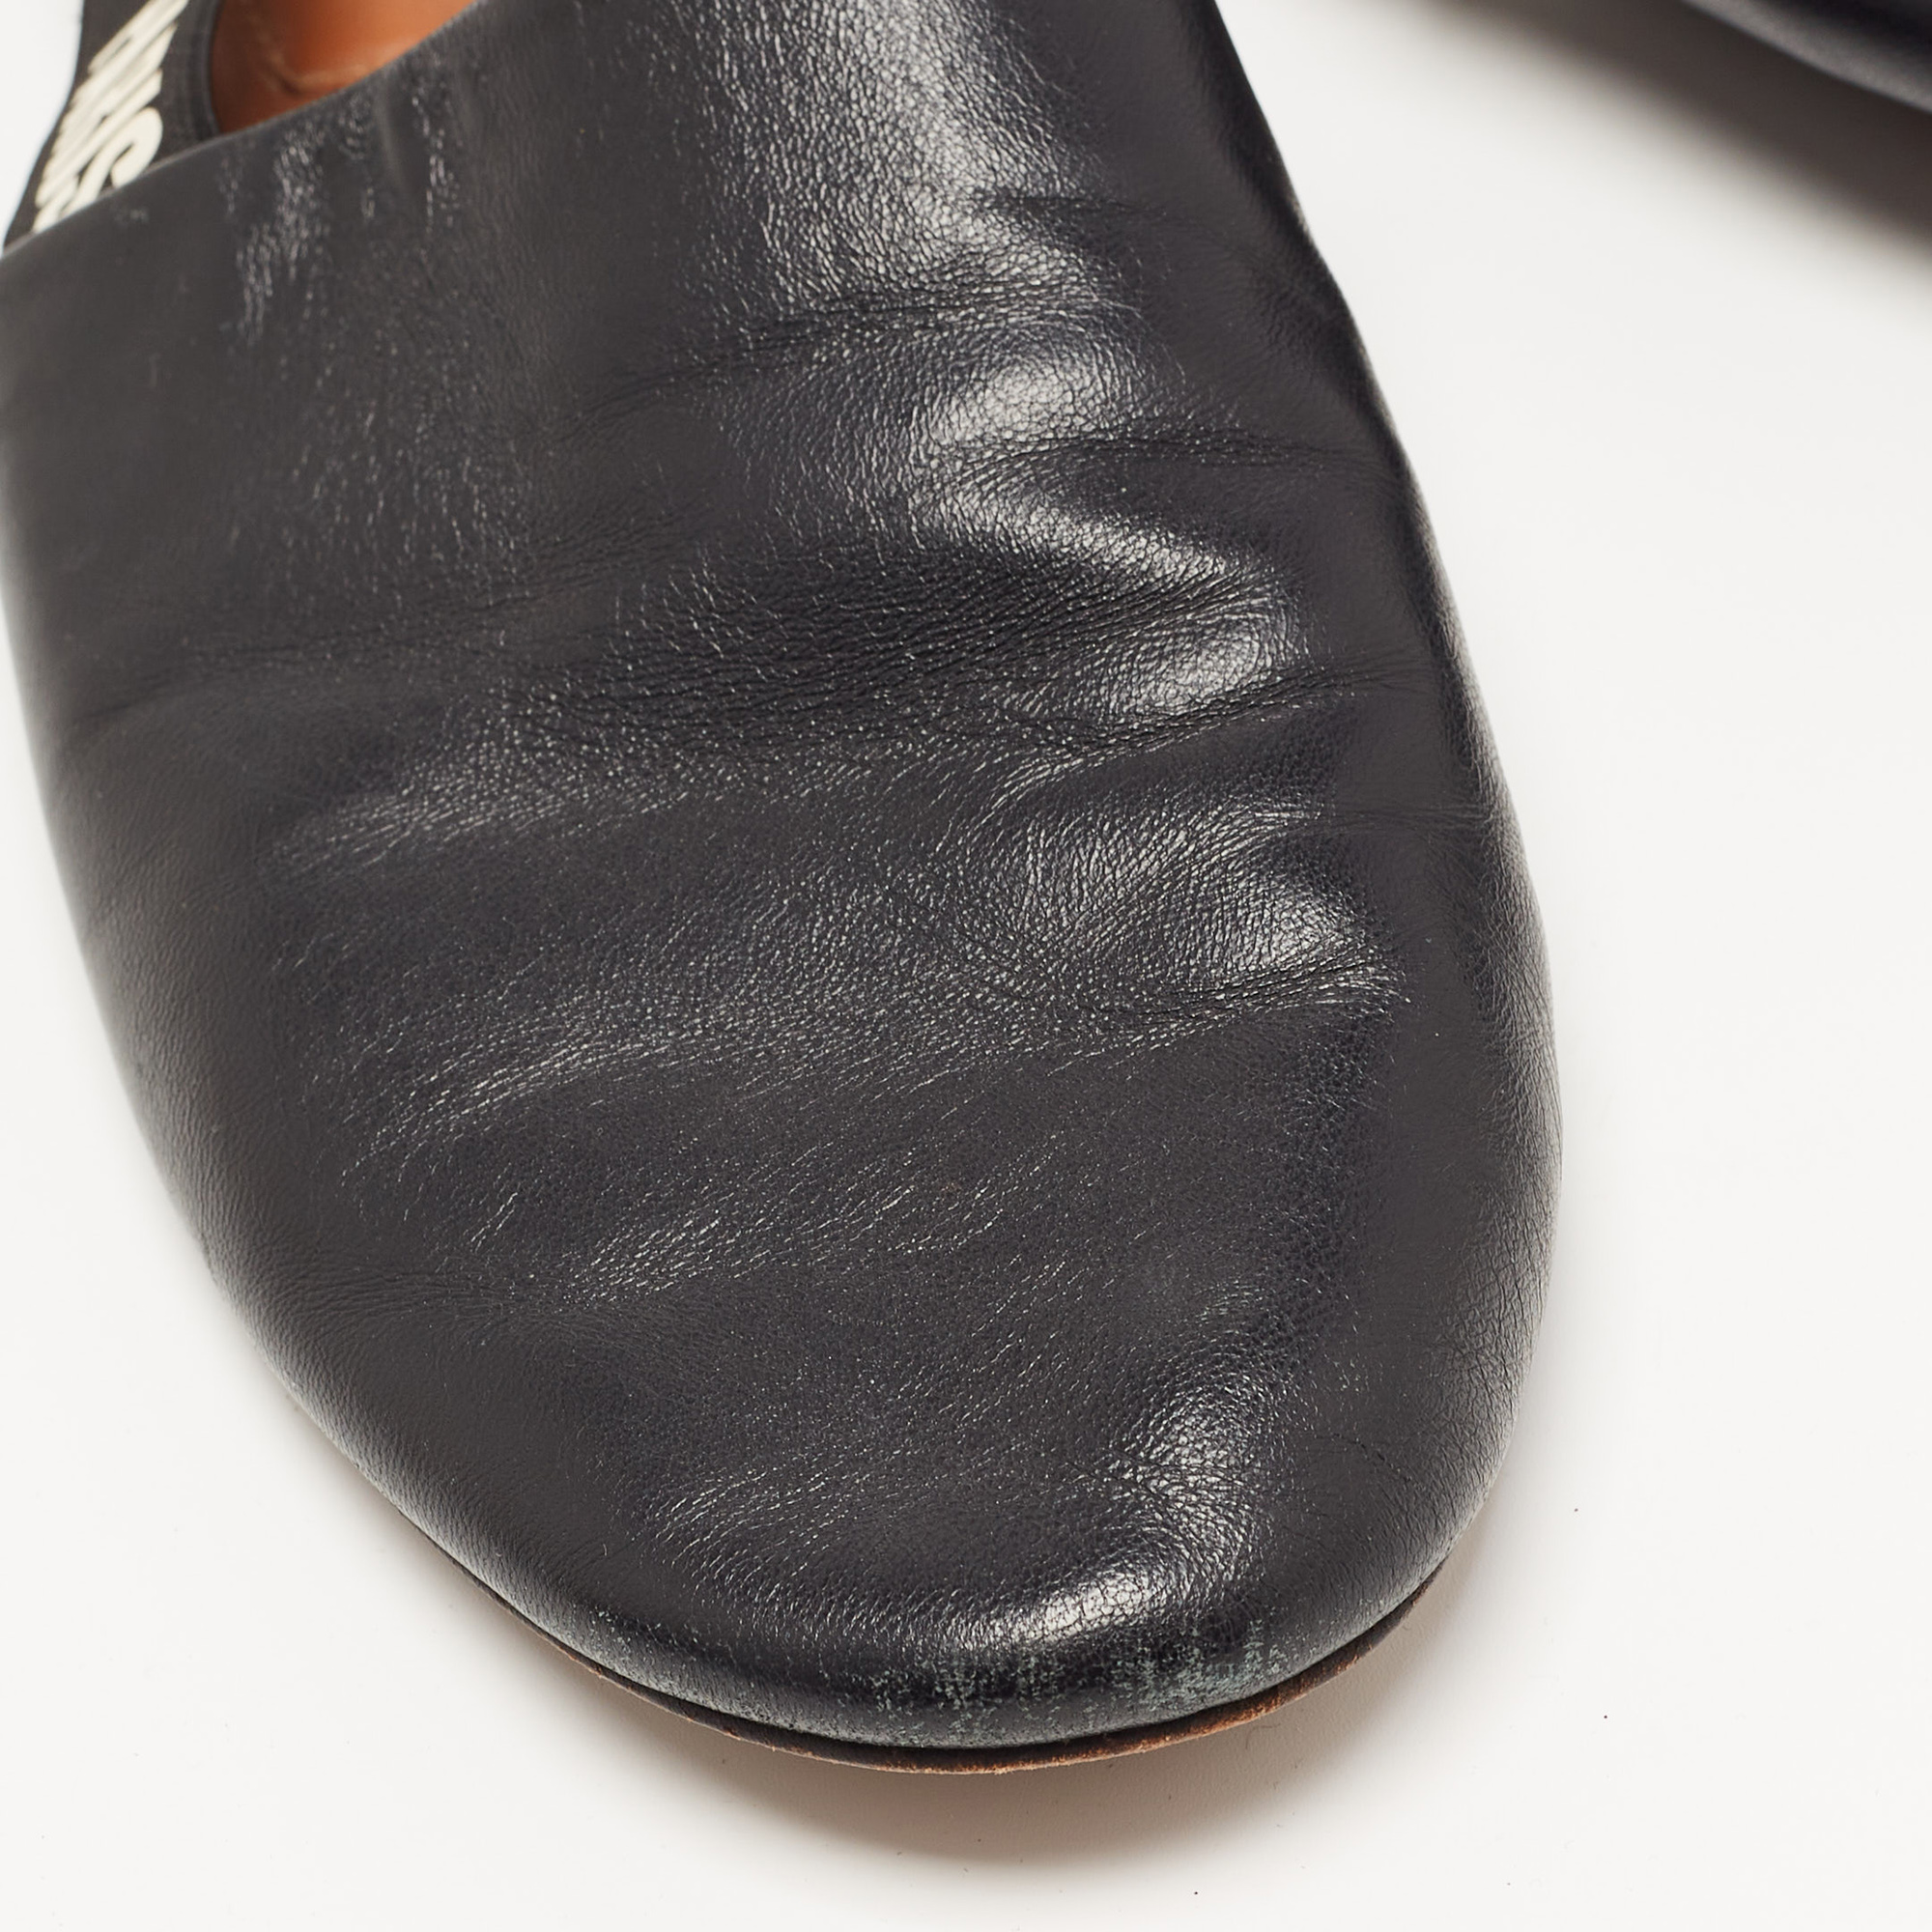 Givenchy Black Leather Rivington Slingback Flats Size 38